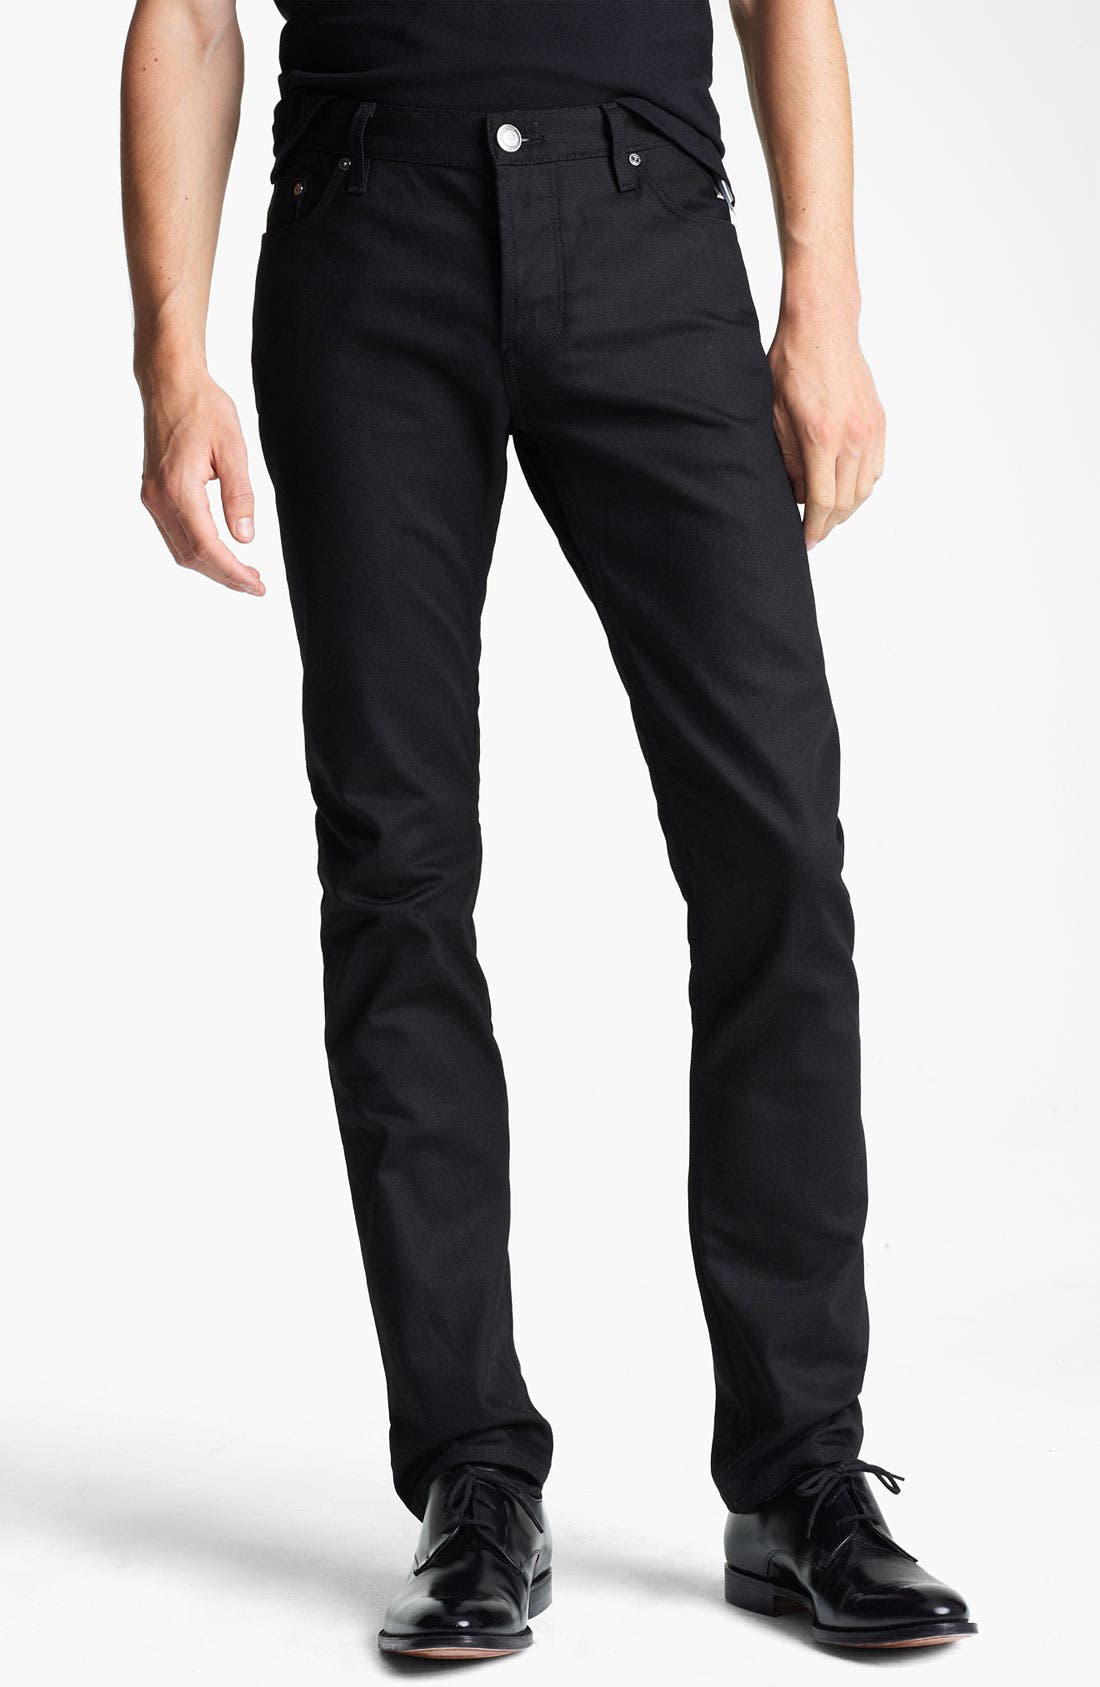 burberry jeans black